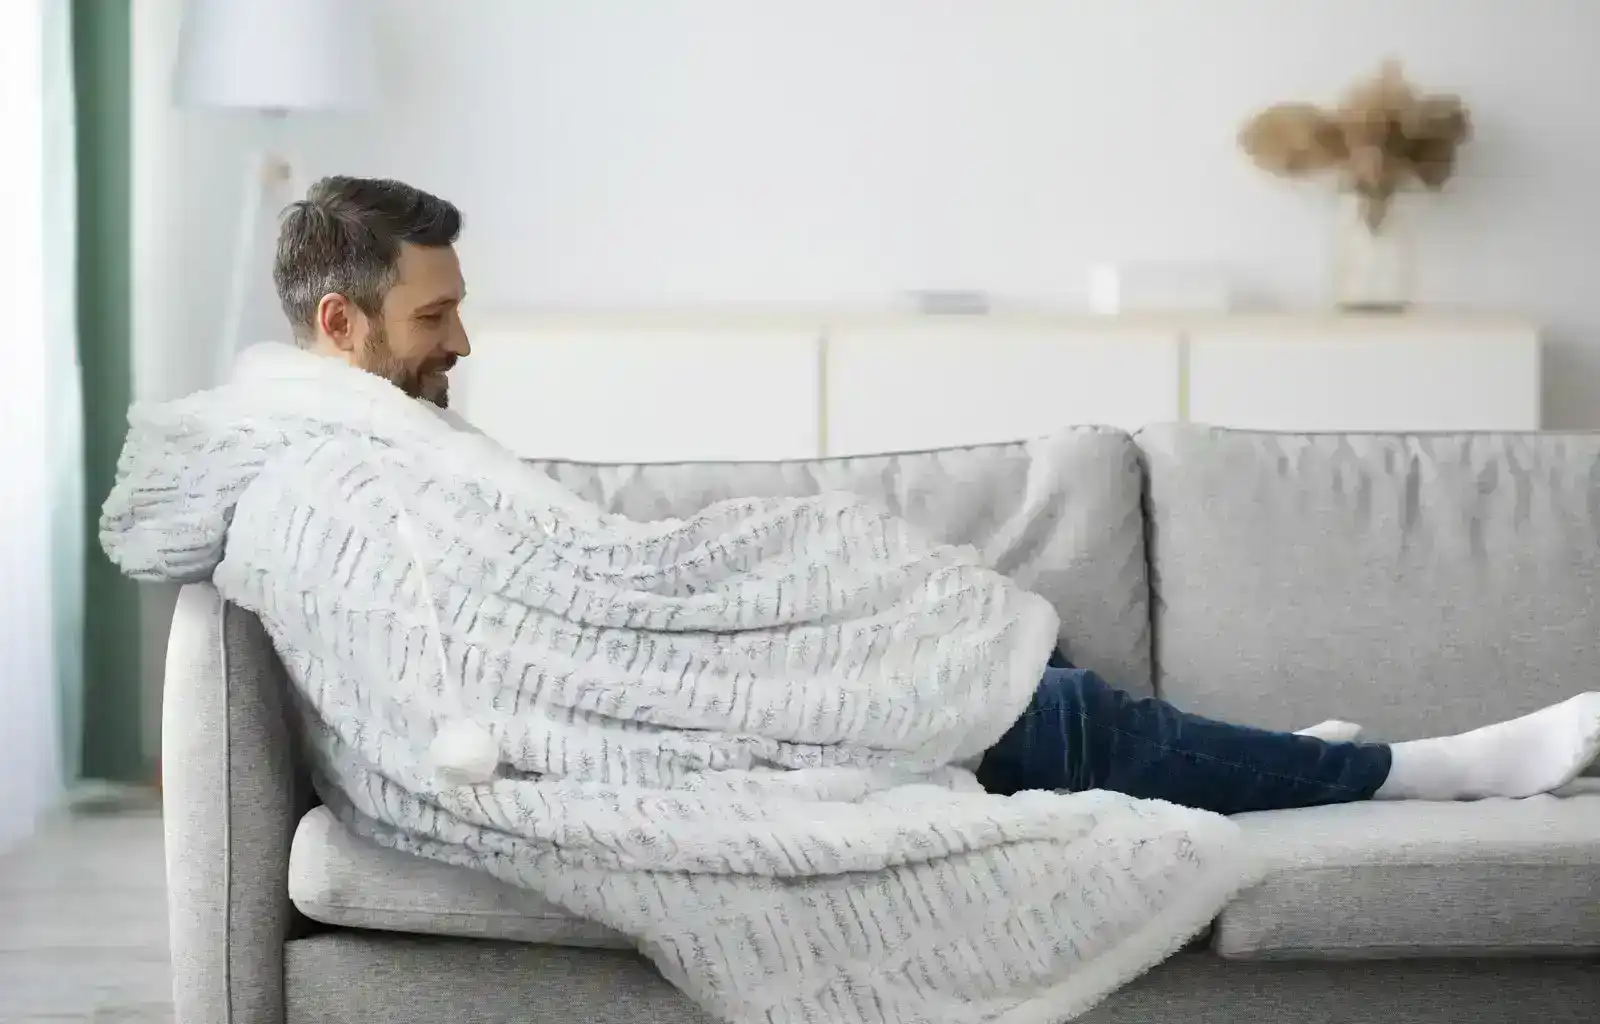 Ardor Houston 130x180cm Hooded Blanket Adult Soft Snuggle Faux Fur Winter Grey